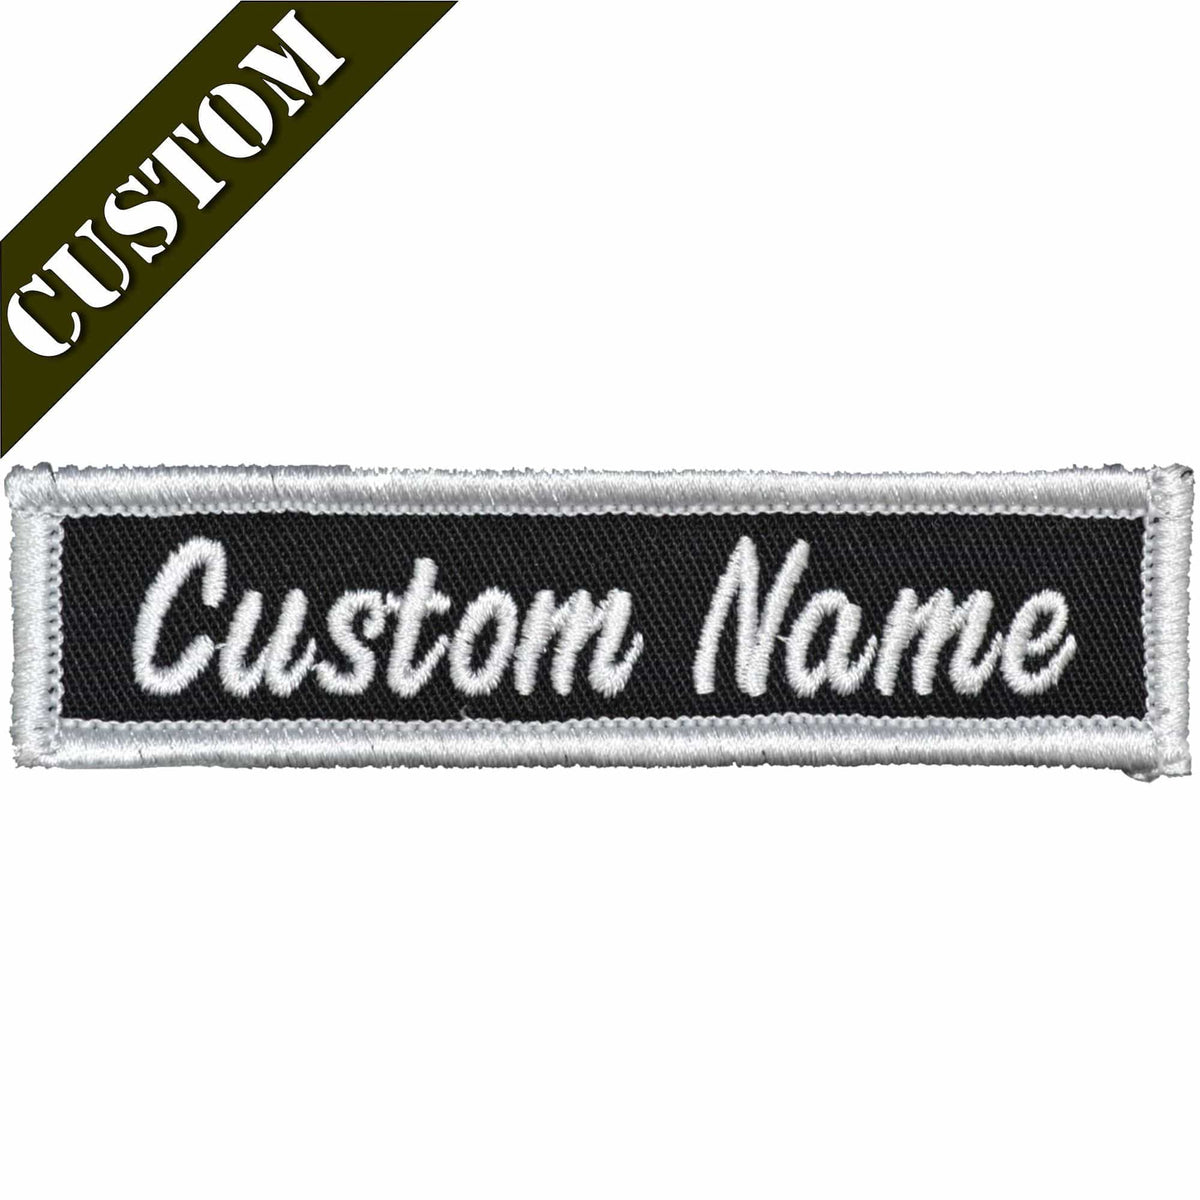 Custom Biker Vest Patch Name Strip - 1x3.75 - Sew On